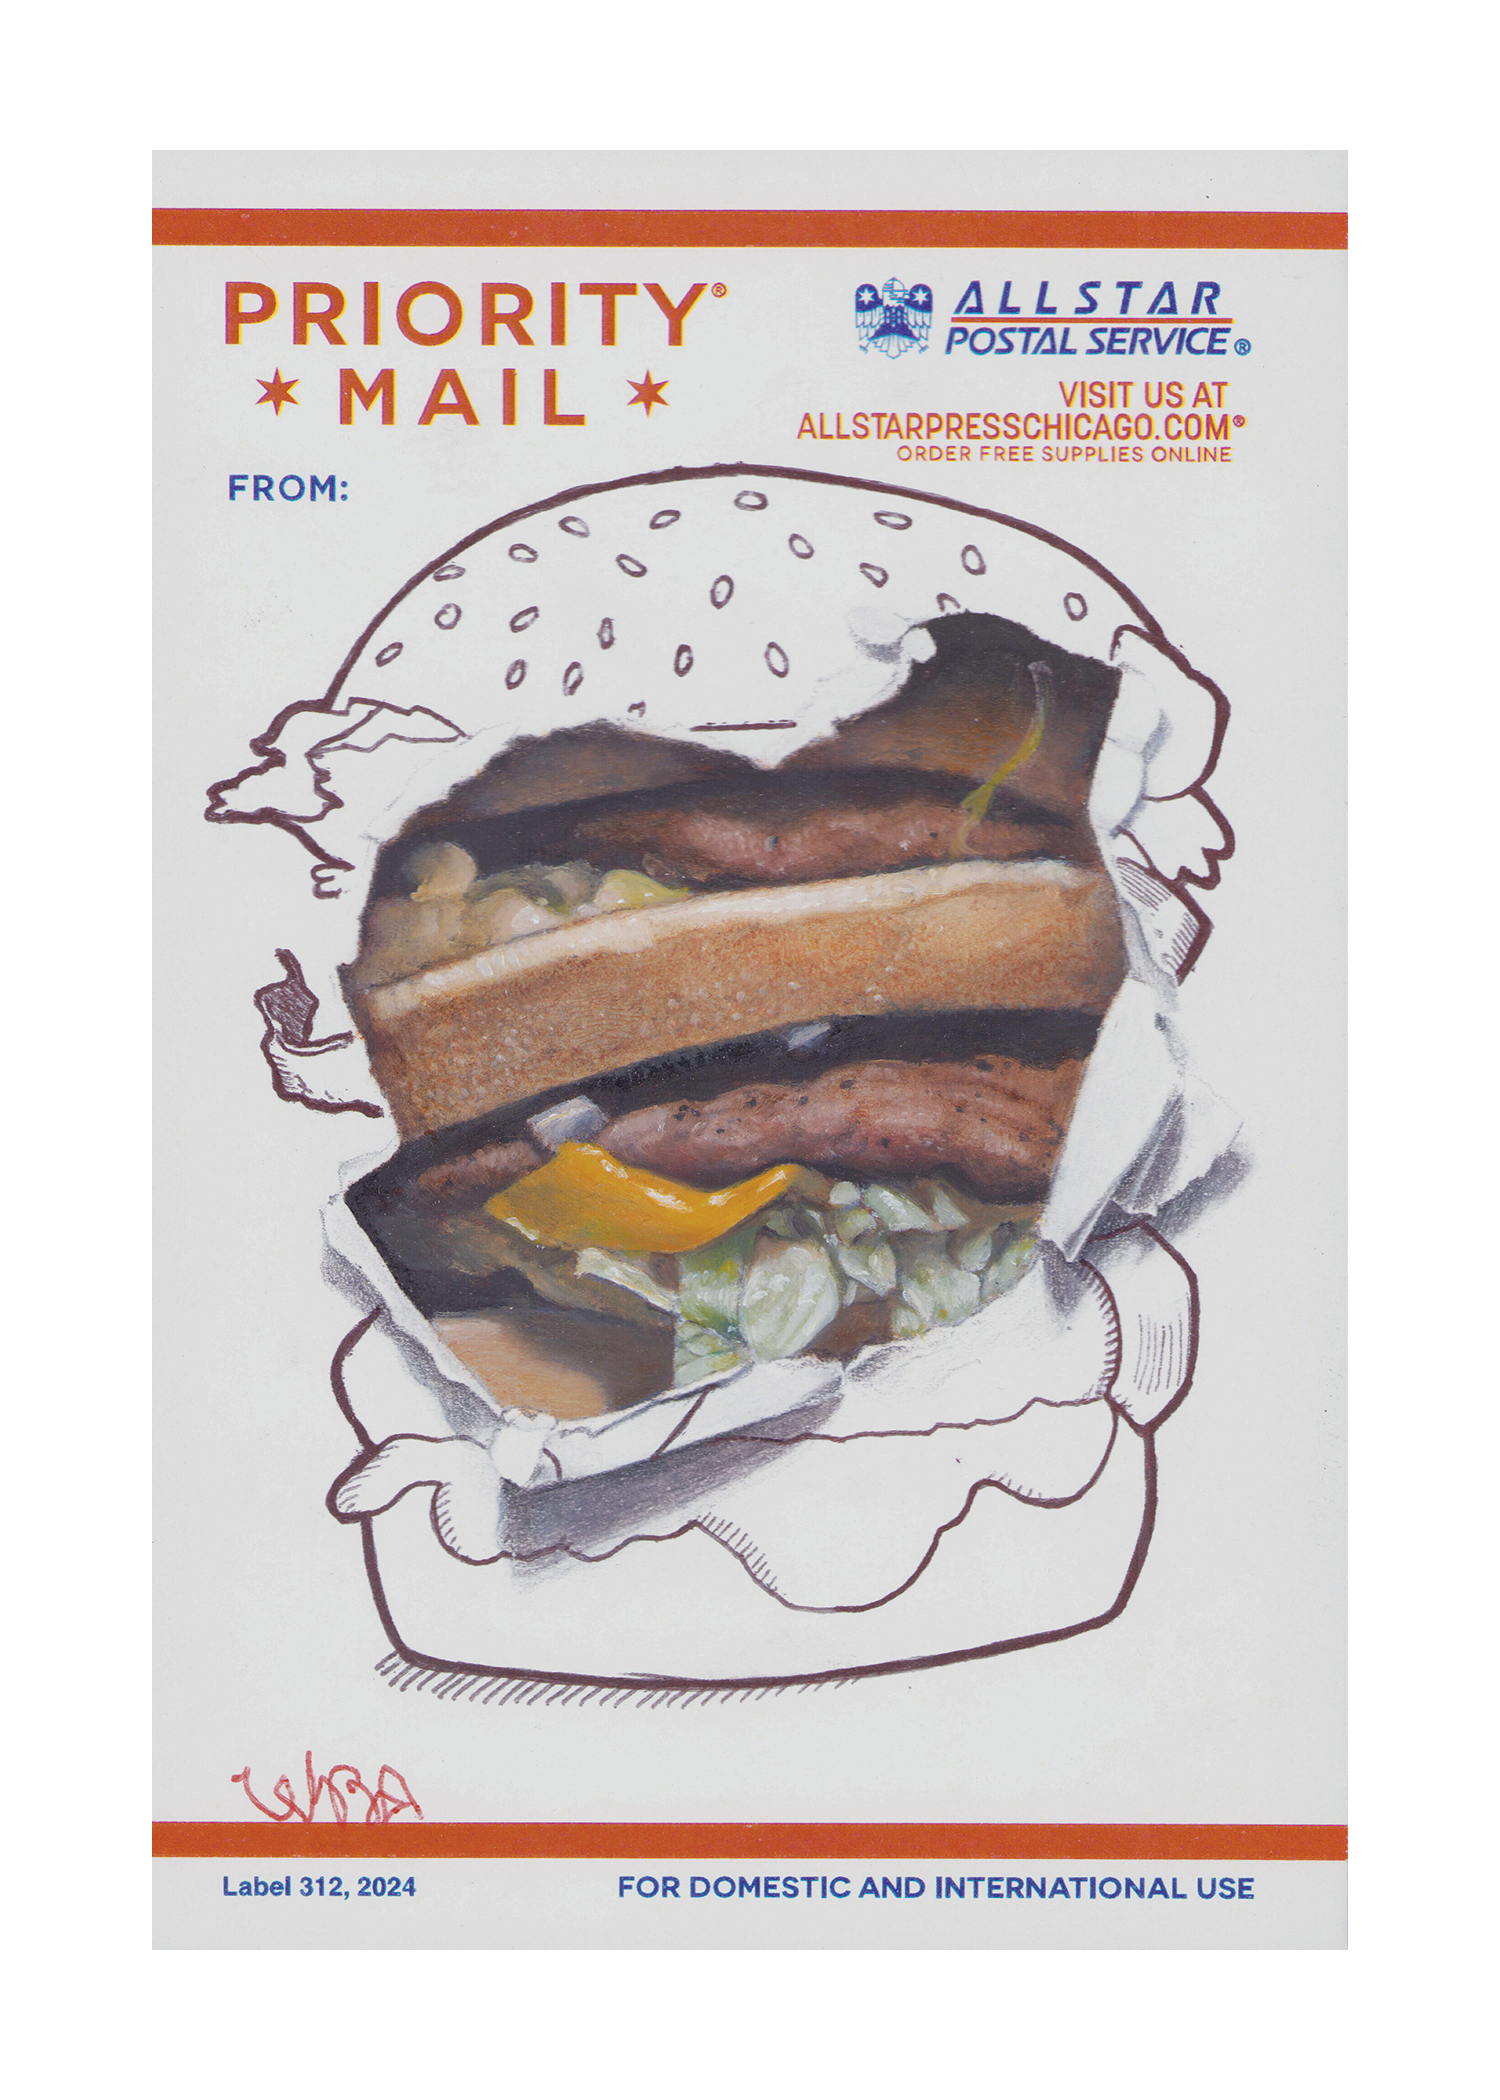 134. Burger by Nick Apple